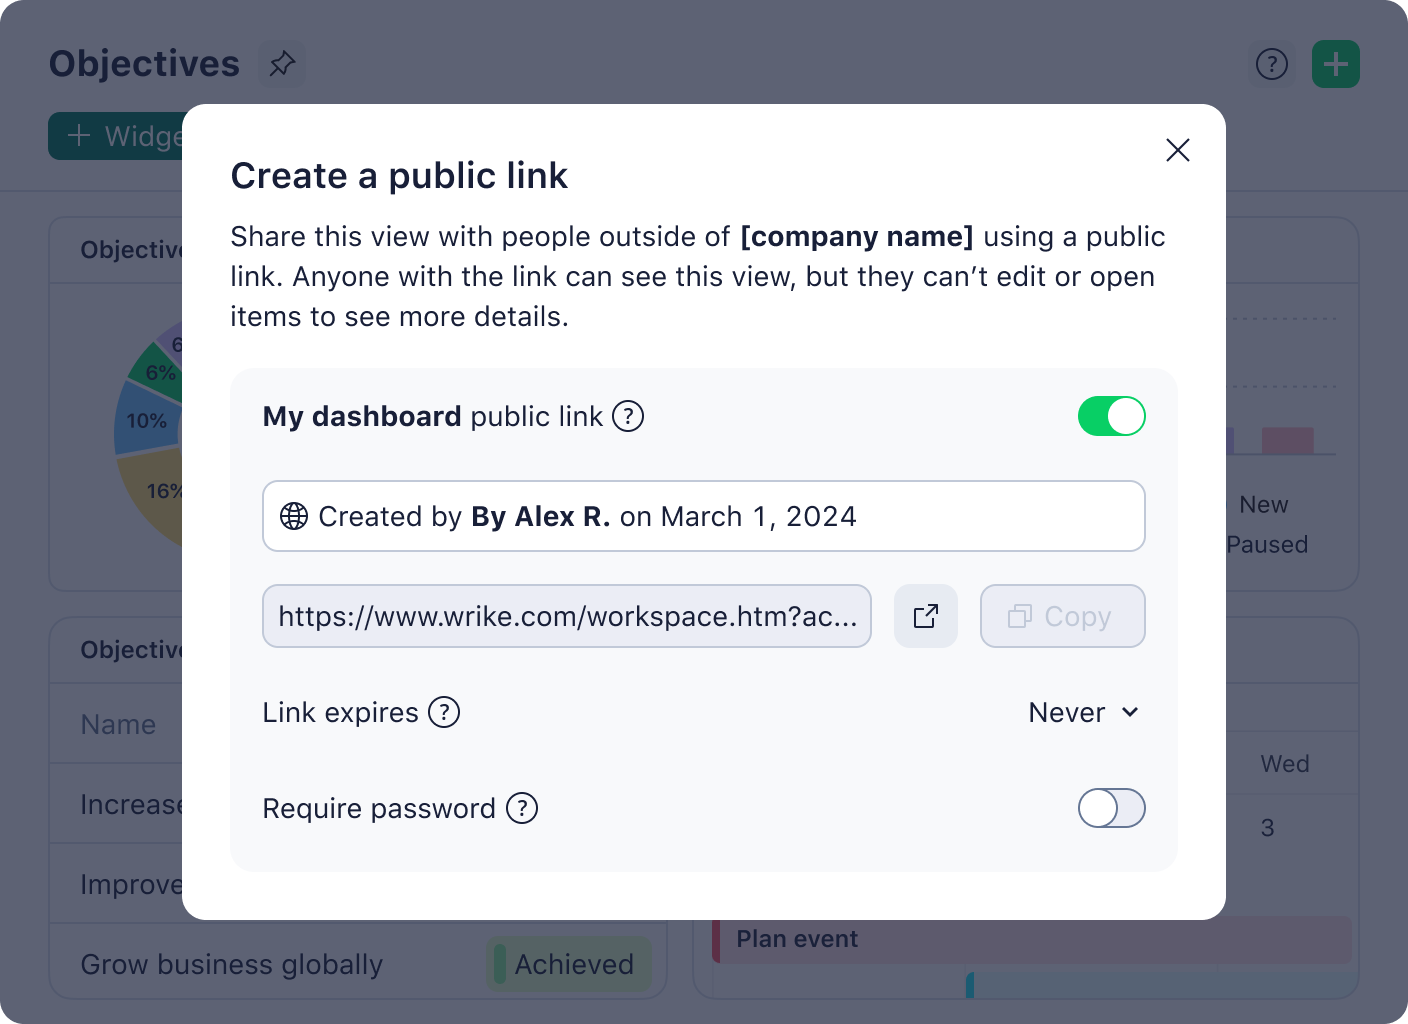 product screenshot of wrike dashboards showing public link